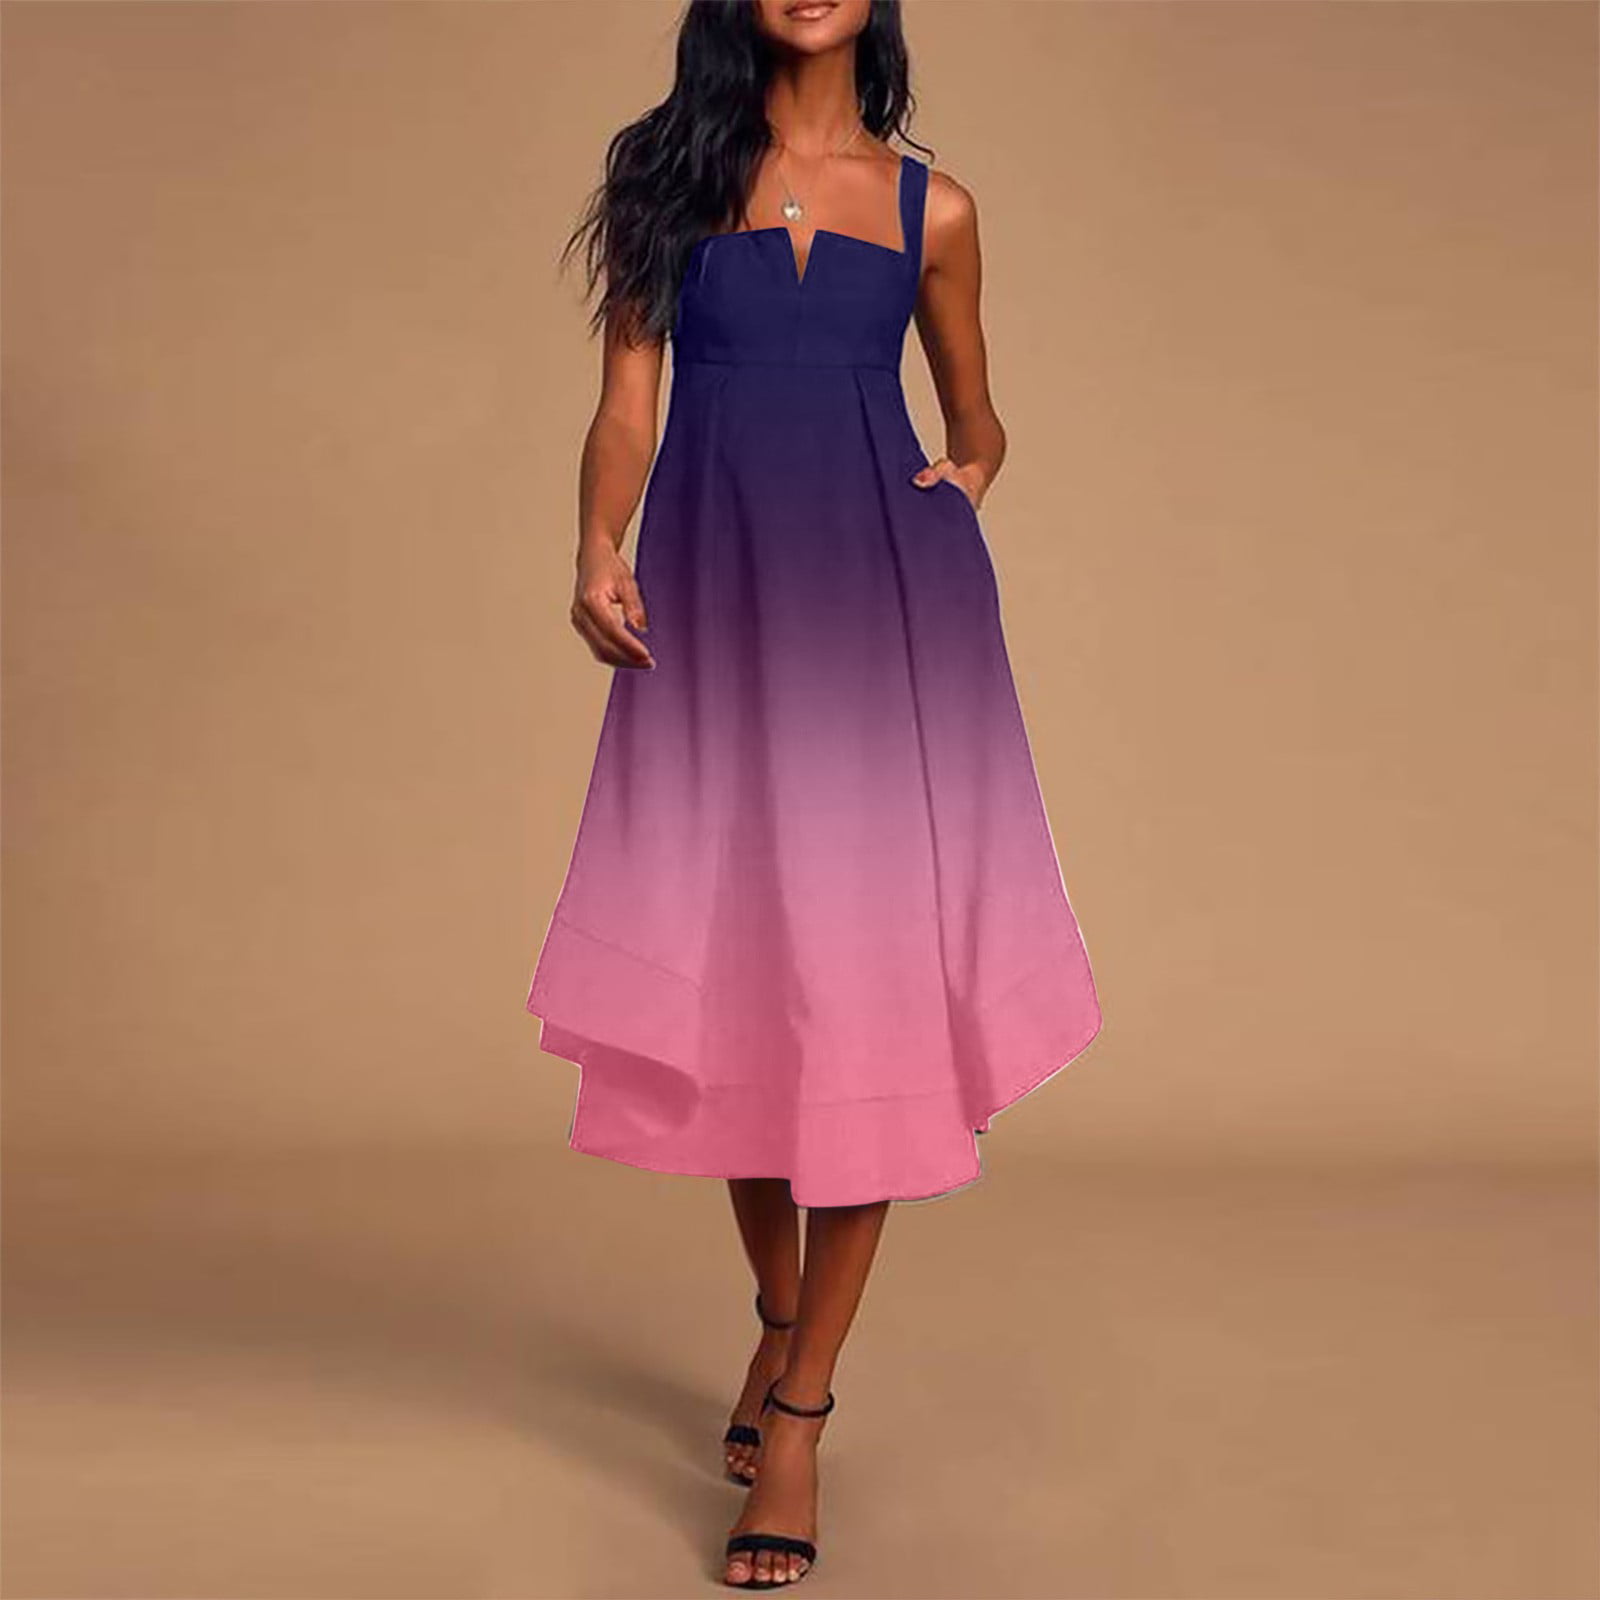 Coerni Women's Summer Dresses Casual ...